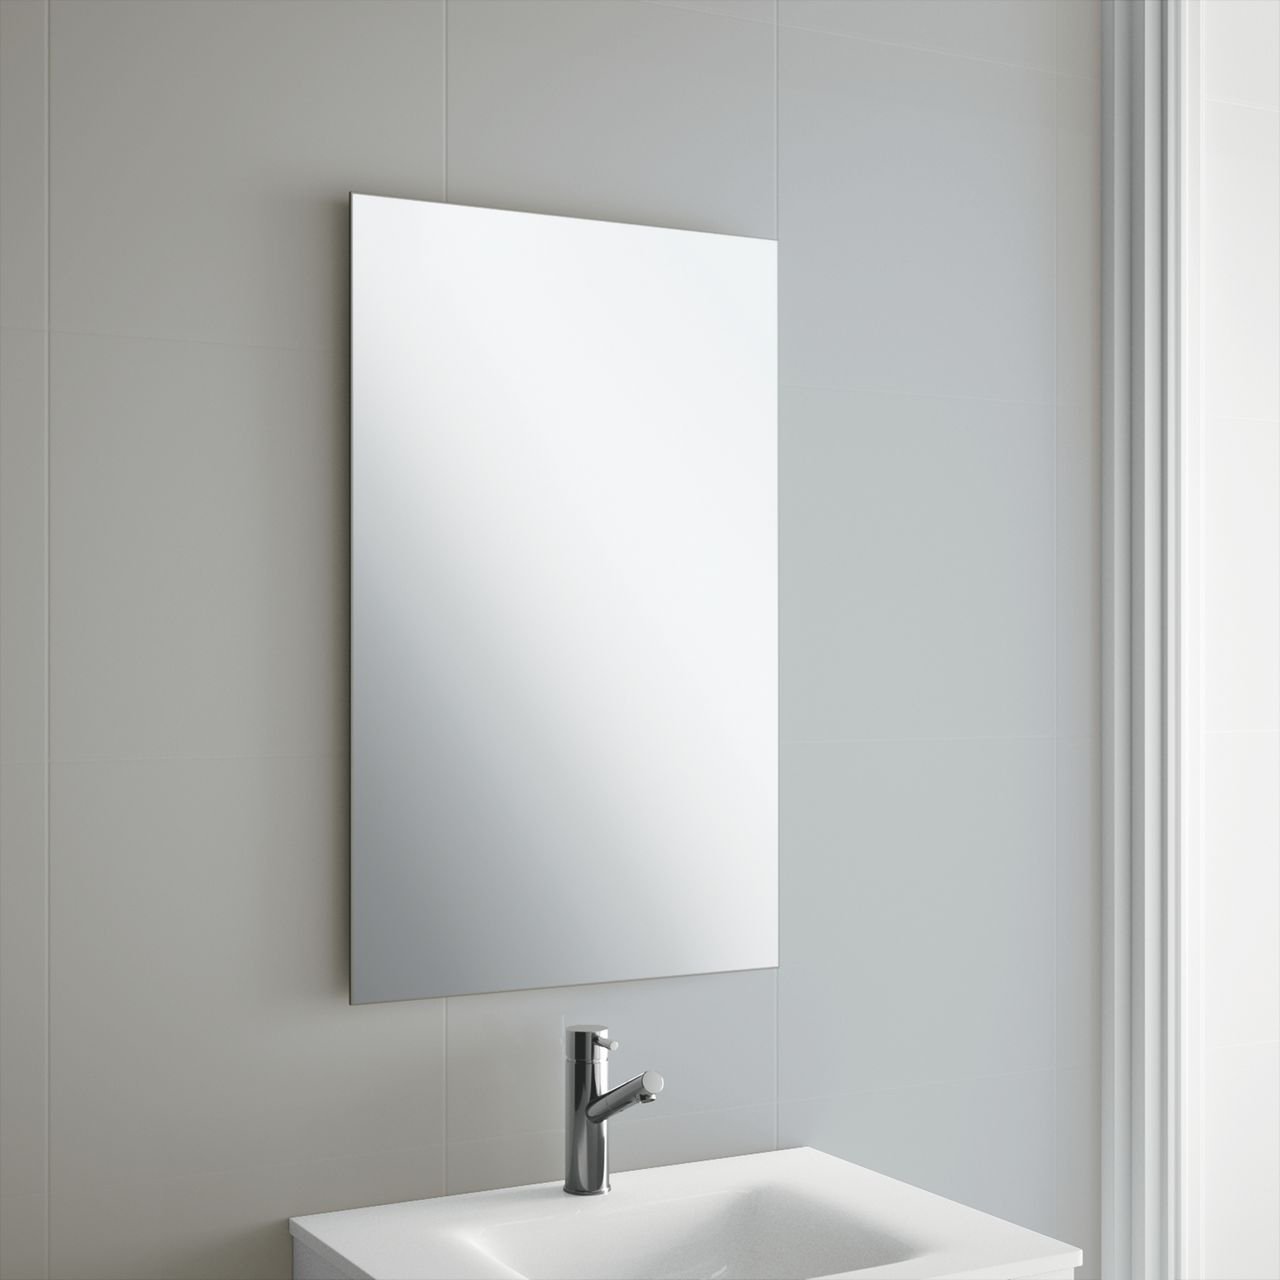 50 x 70cm Frameless Rectangle Bathroom Mirror with Wall ...